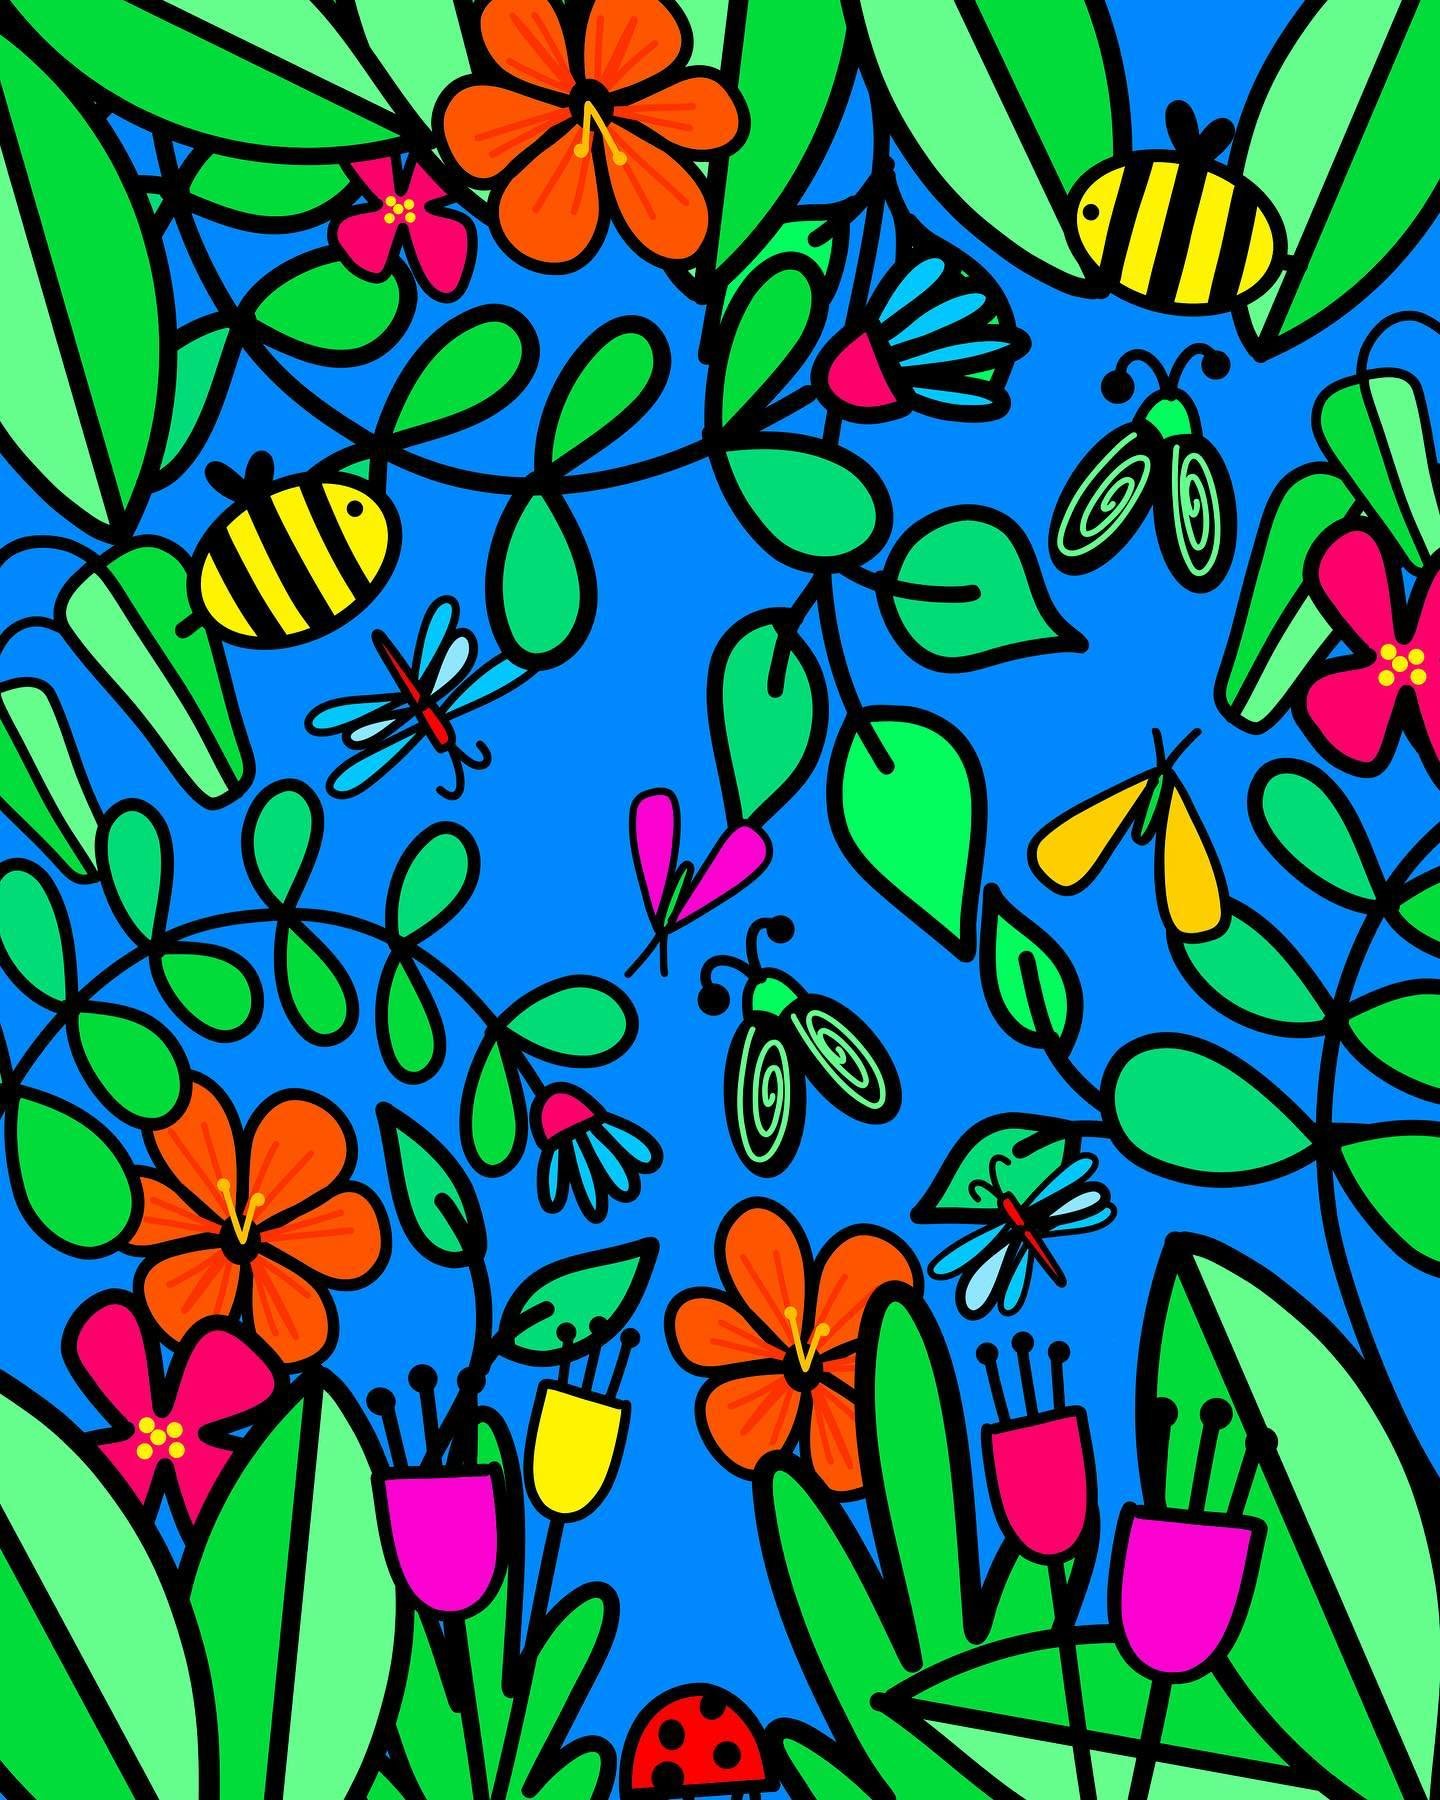 Drawing some little things on a relatively quiet evening 🍃 🐞 🐝🦋 ✍️ 

&mdash;&mdash;
#itsthelittlethings #drawingdaily #drawingoftheday #adobefresco #adobeart #adobeartist #ipadart #thursdaythoughts #thursdayvibes #floralart #gardenart #gardendraw